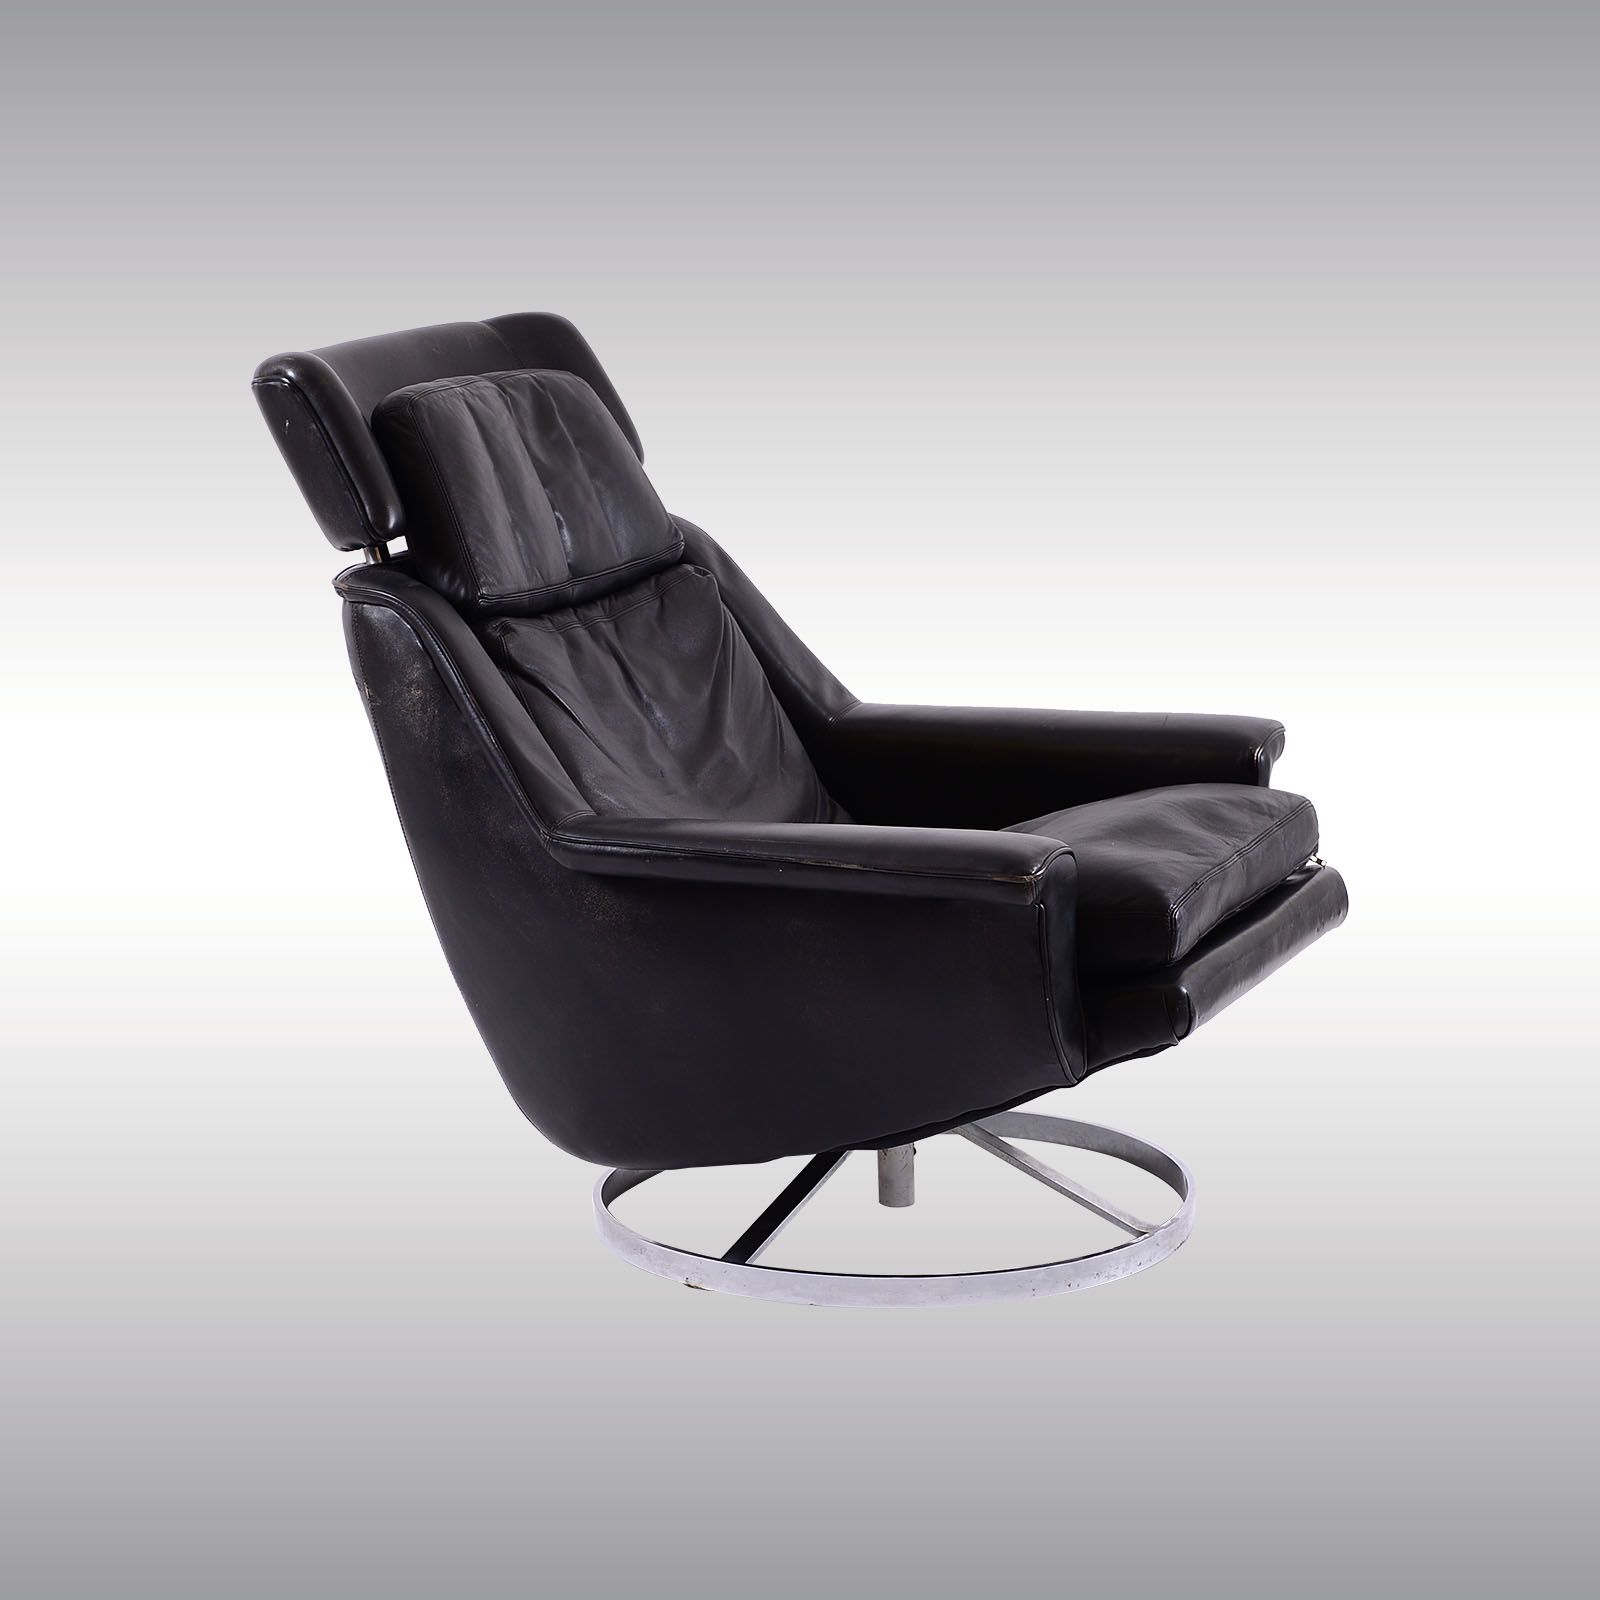 WOKA LAMPS VIENNA - OrderNr.: 80019|Eames Era Chair - Design: WOKA